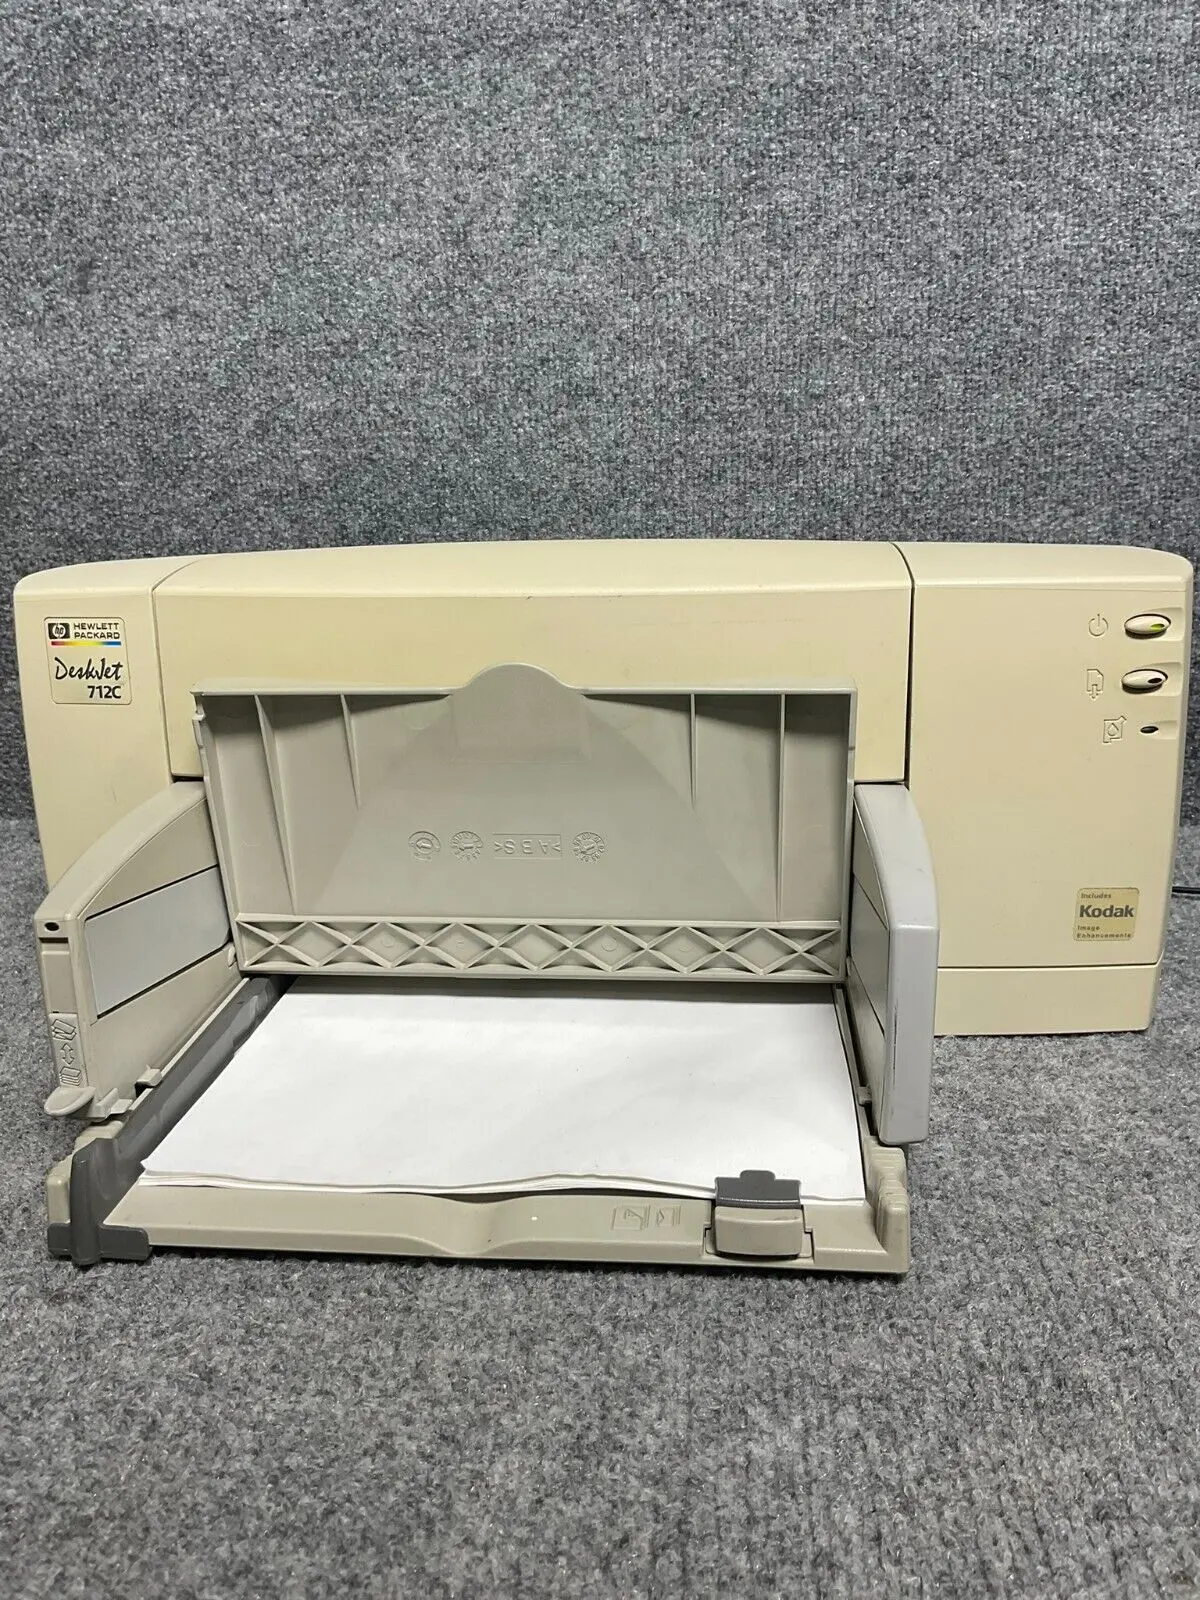 hewlett packard deskjet 712c printer - What was the first HP inkjet printer